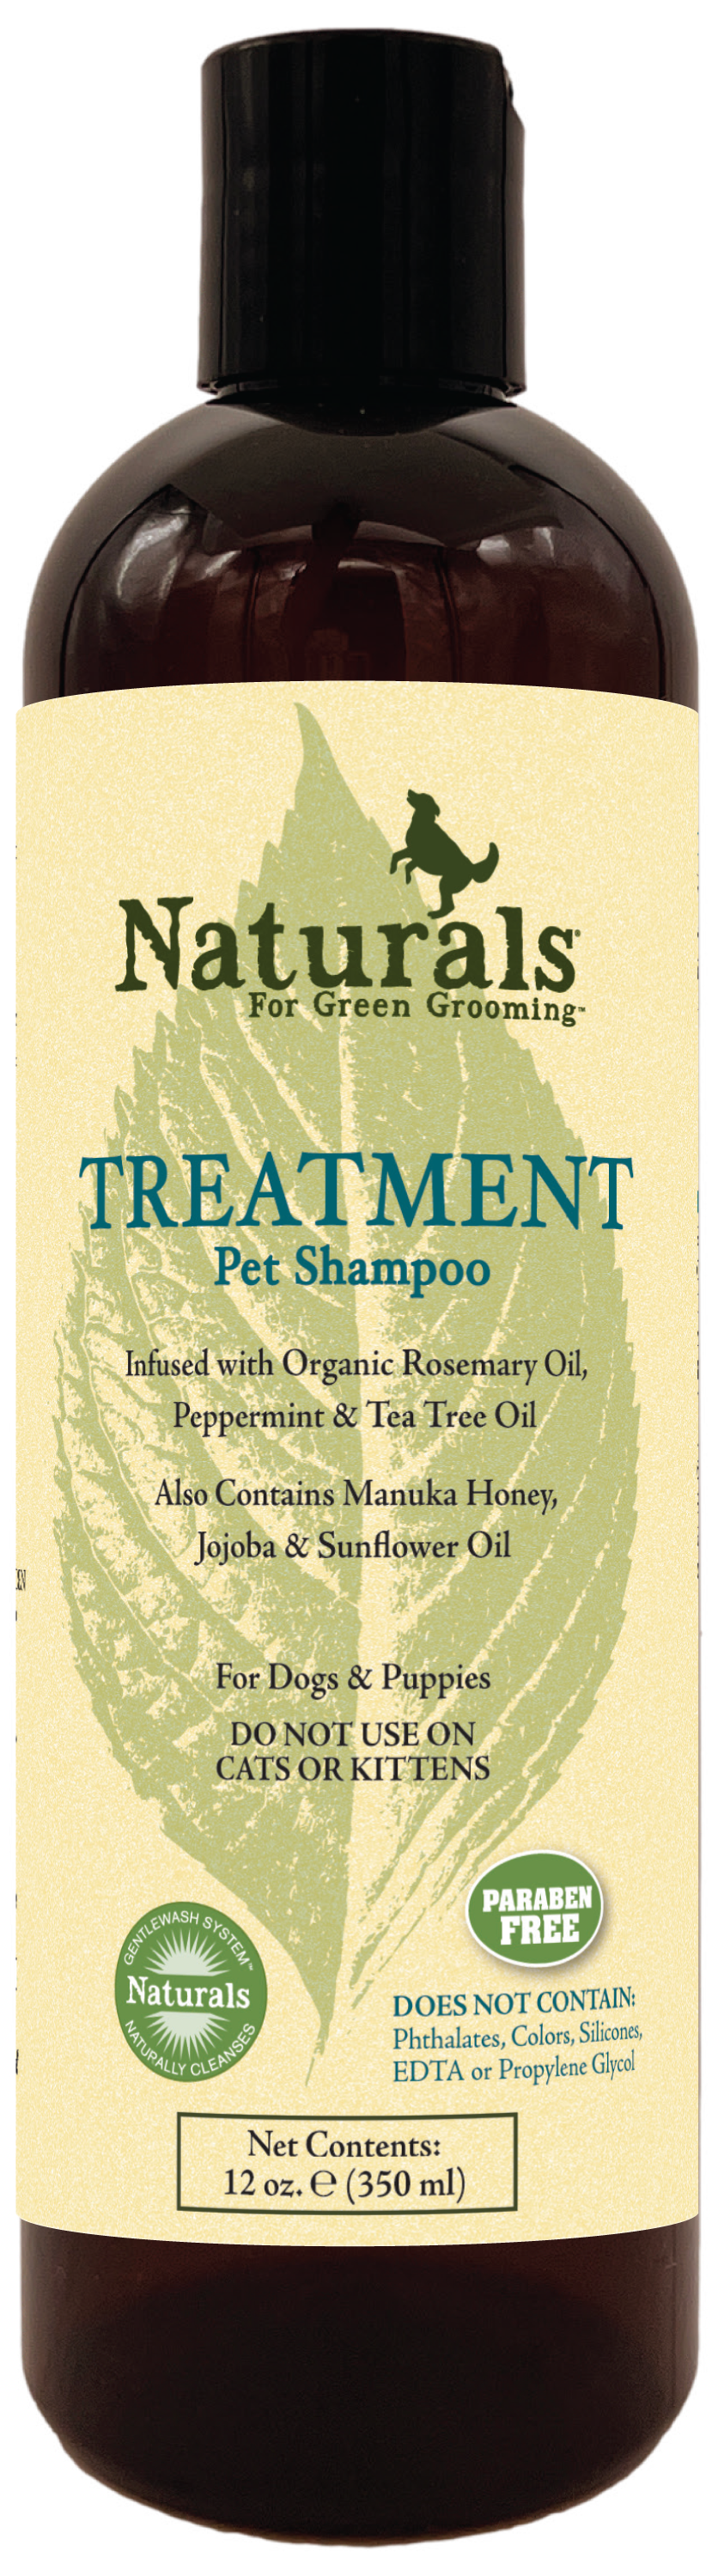 Treatment Pet Shampoo